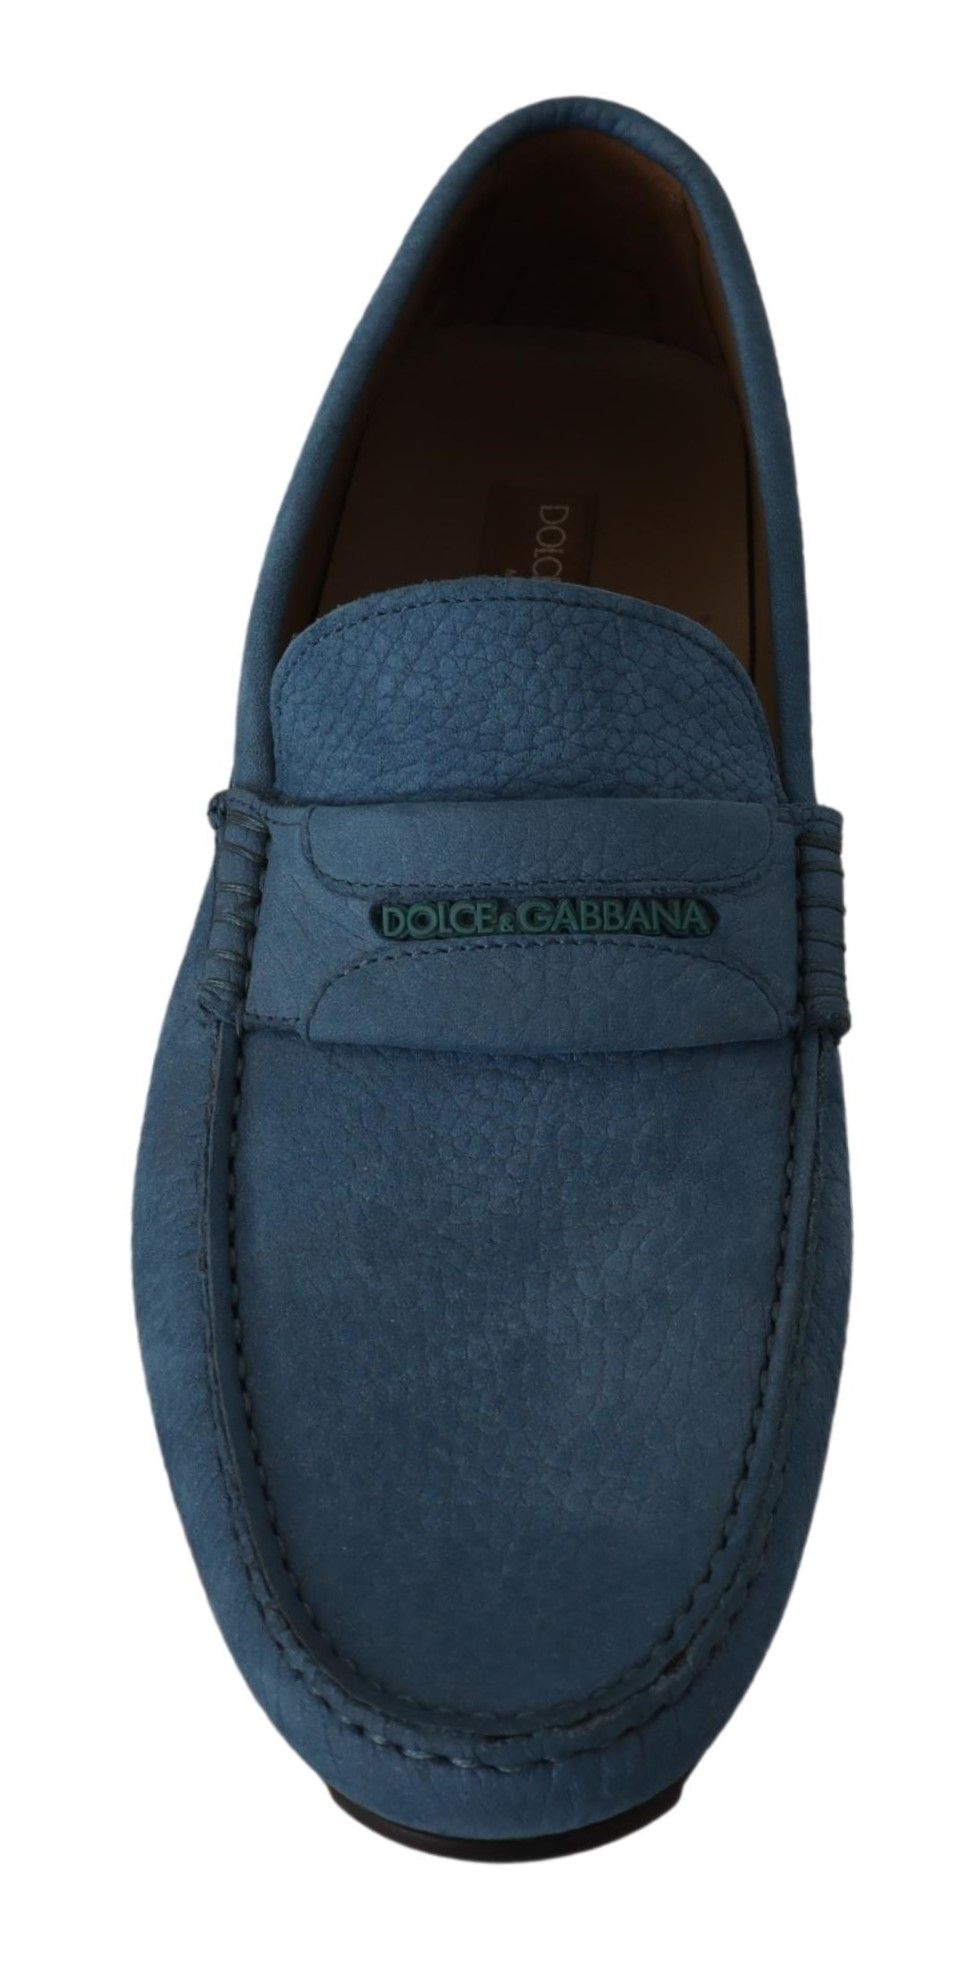 Blue Leather Flat Slip On Mocassin Shoes